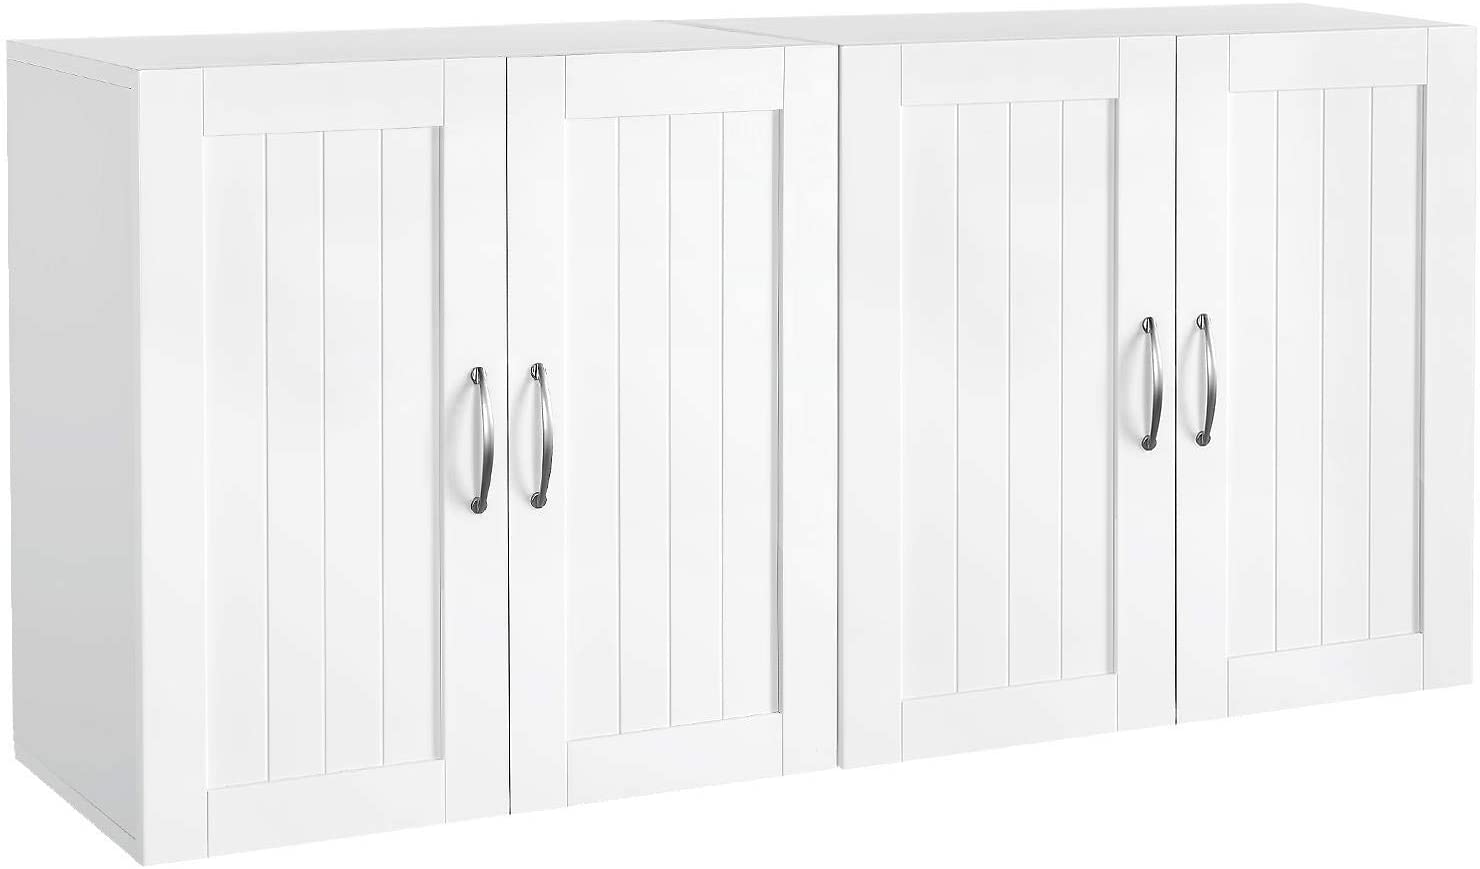 YAHEETECH Double-Door Adjustable Mounted Cabinet Set, Set Of 2